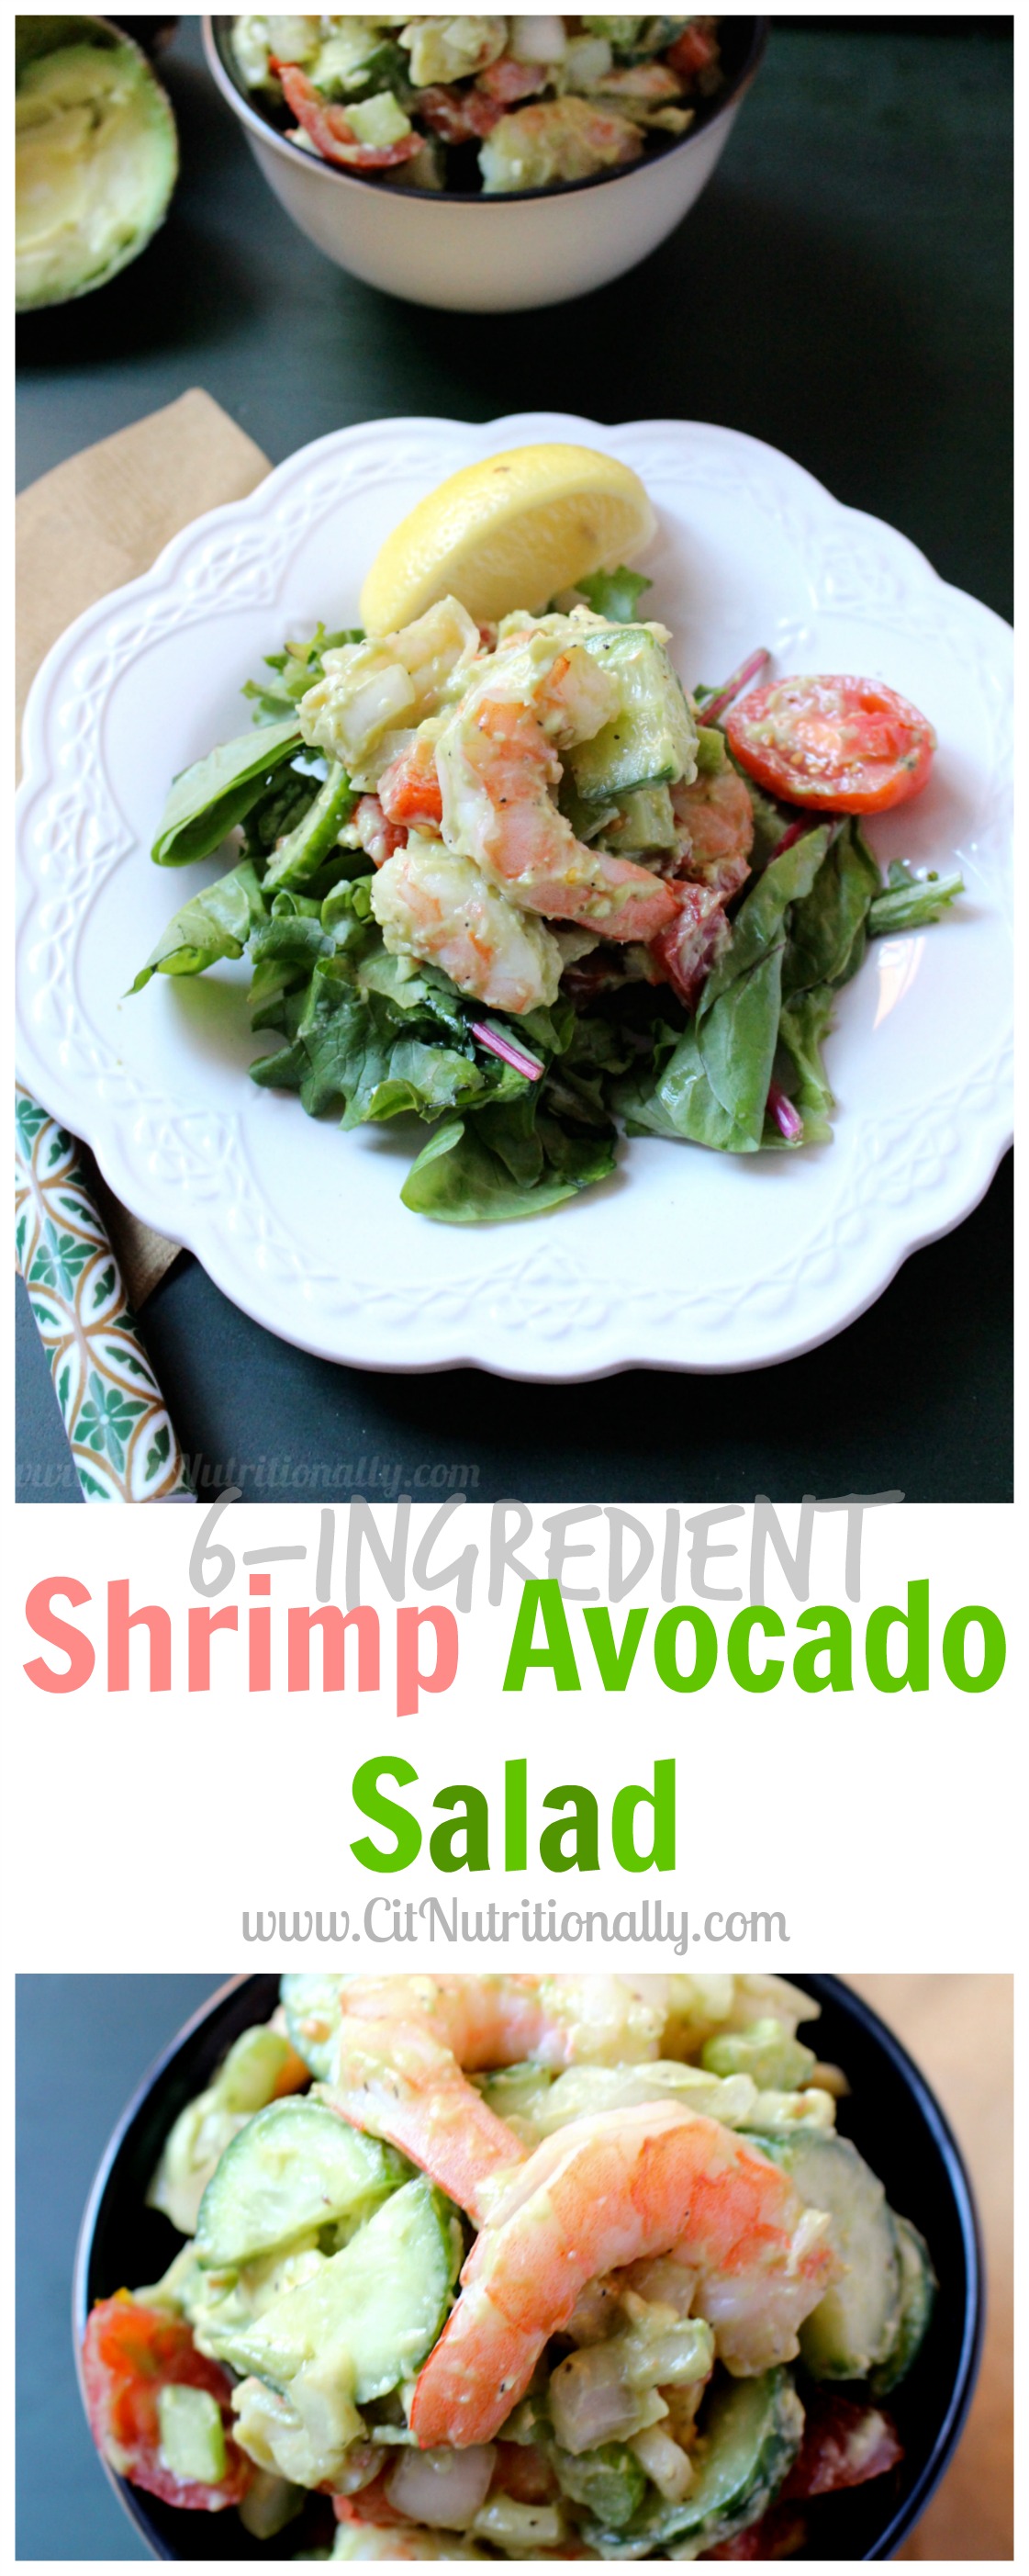 6-Ingredient Shrimp Avocado Salad